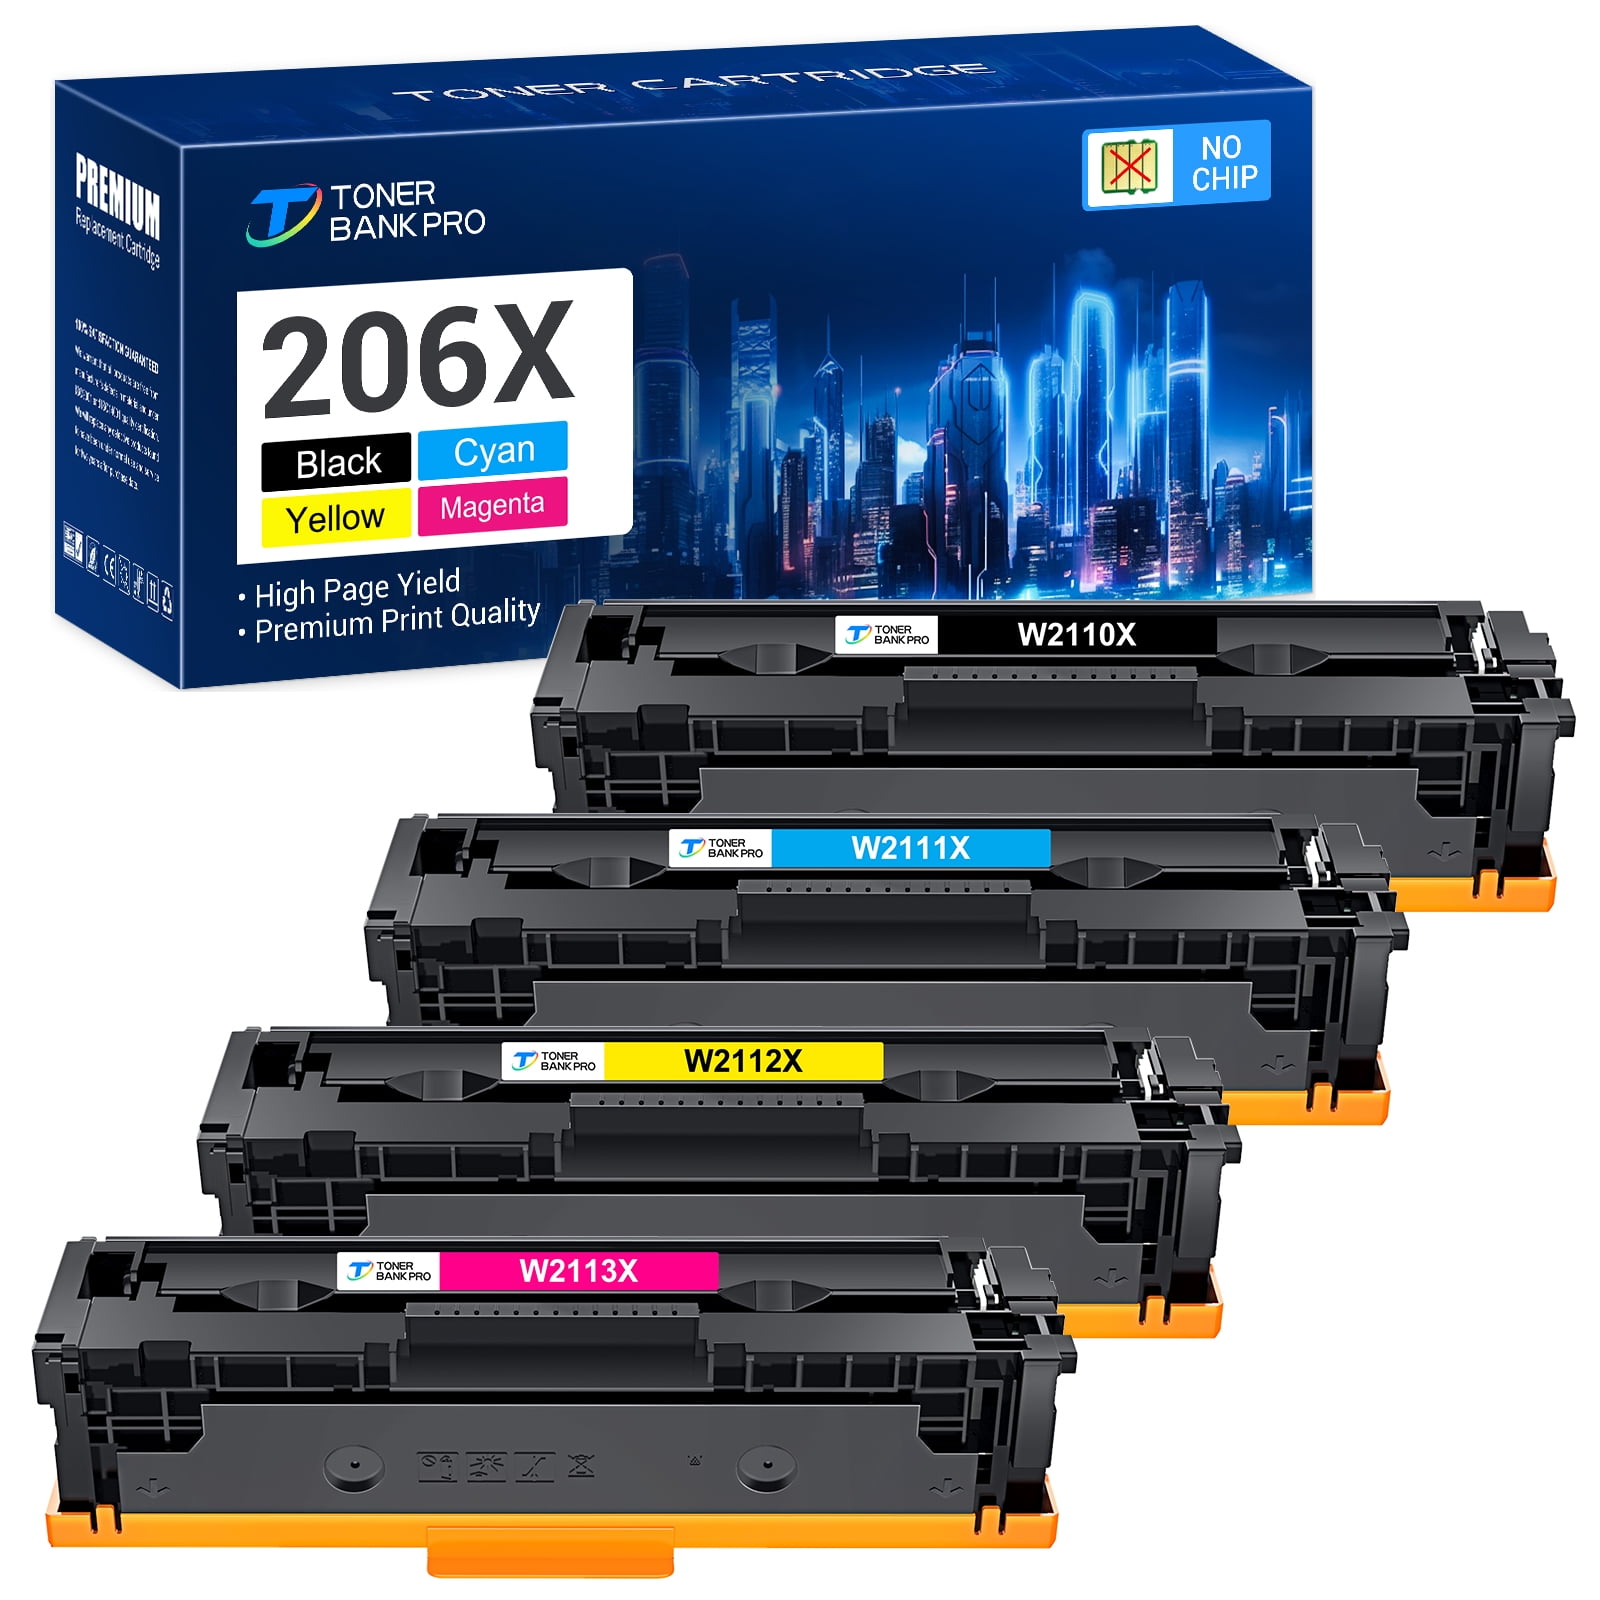 Toner Bank Compatible 206X Toner Cartridge NO CHIP for HP 206X W2110X  W2111X W2113X W2112X High Yield (Black, Cyan, Magenta, Yellow, 4-Pack)